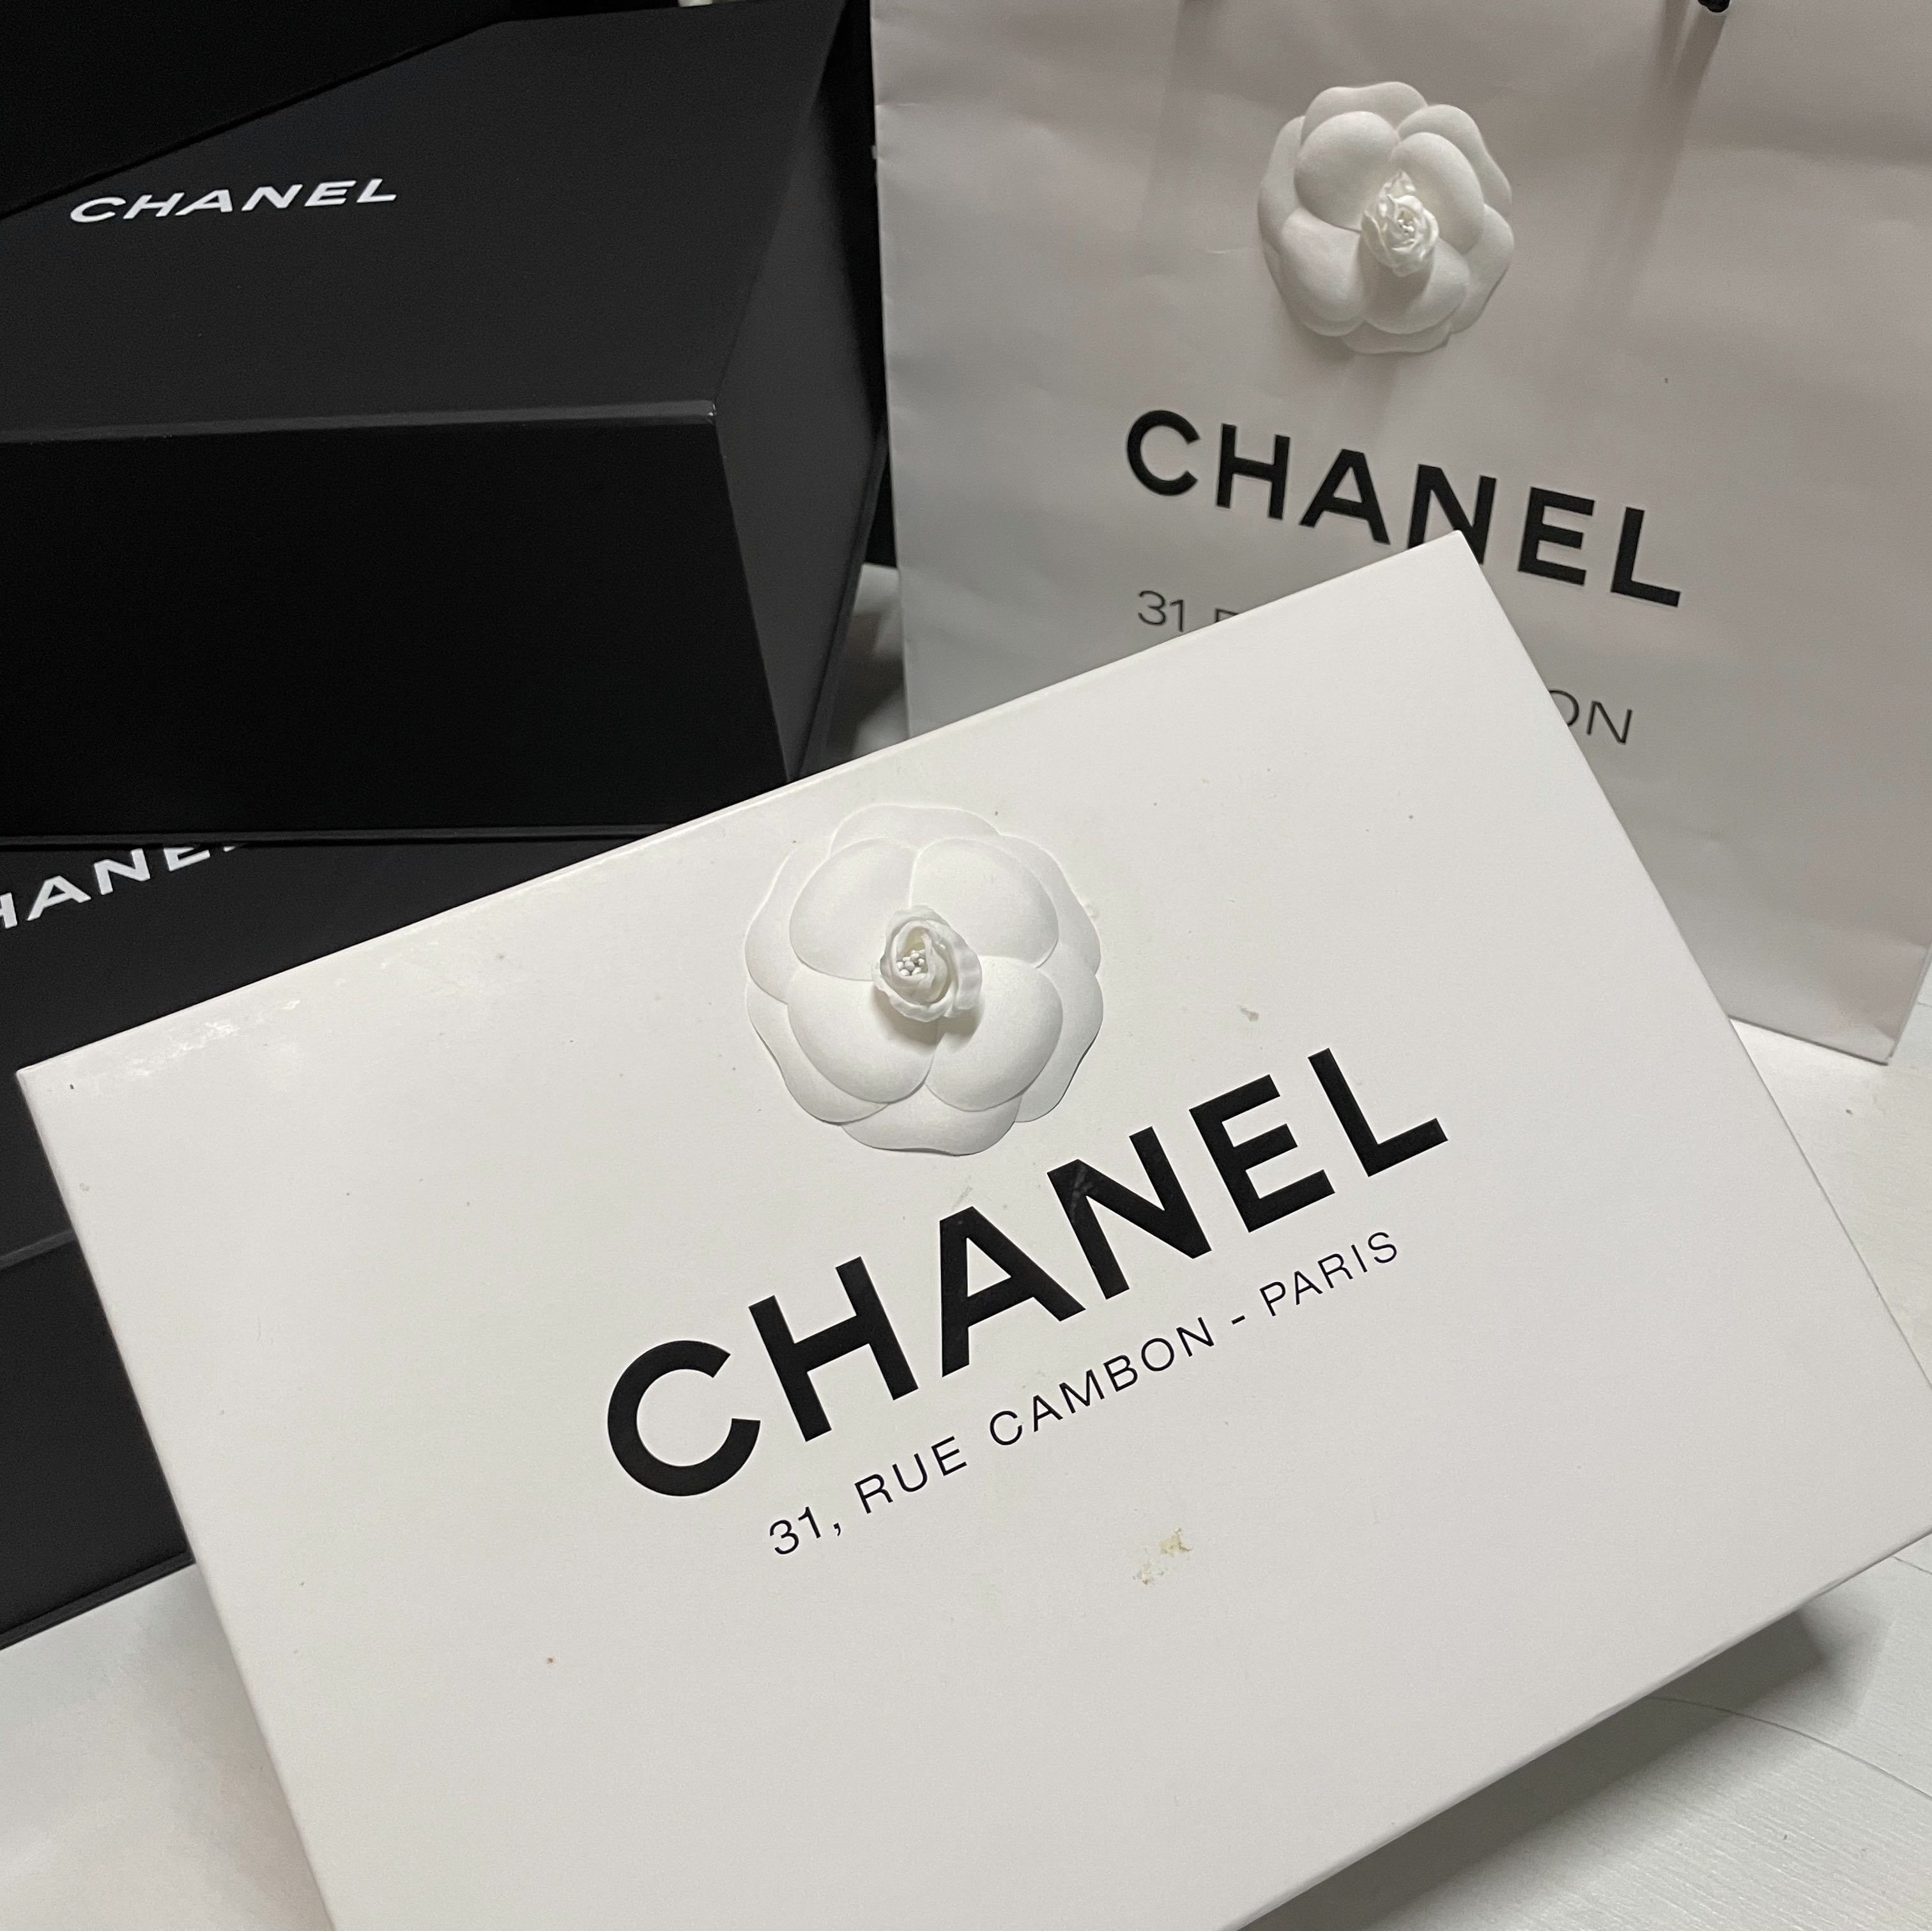 CHANEL Gift Box  Gift Bag SET Authentic Black amp White NEW 9034 x  55 034x 3034  eBay